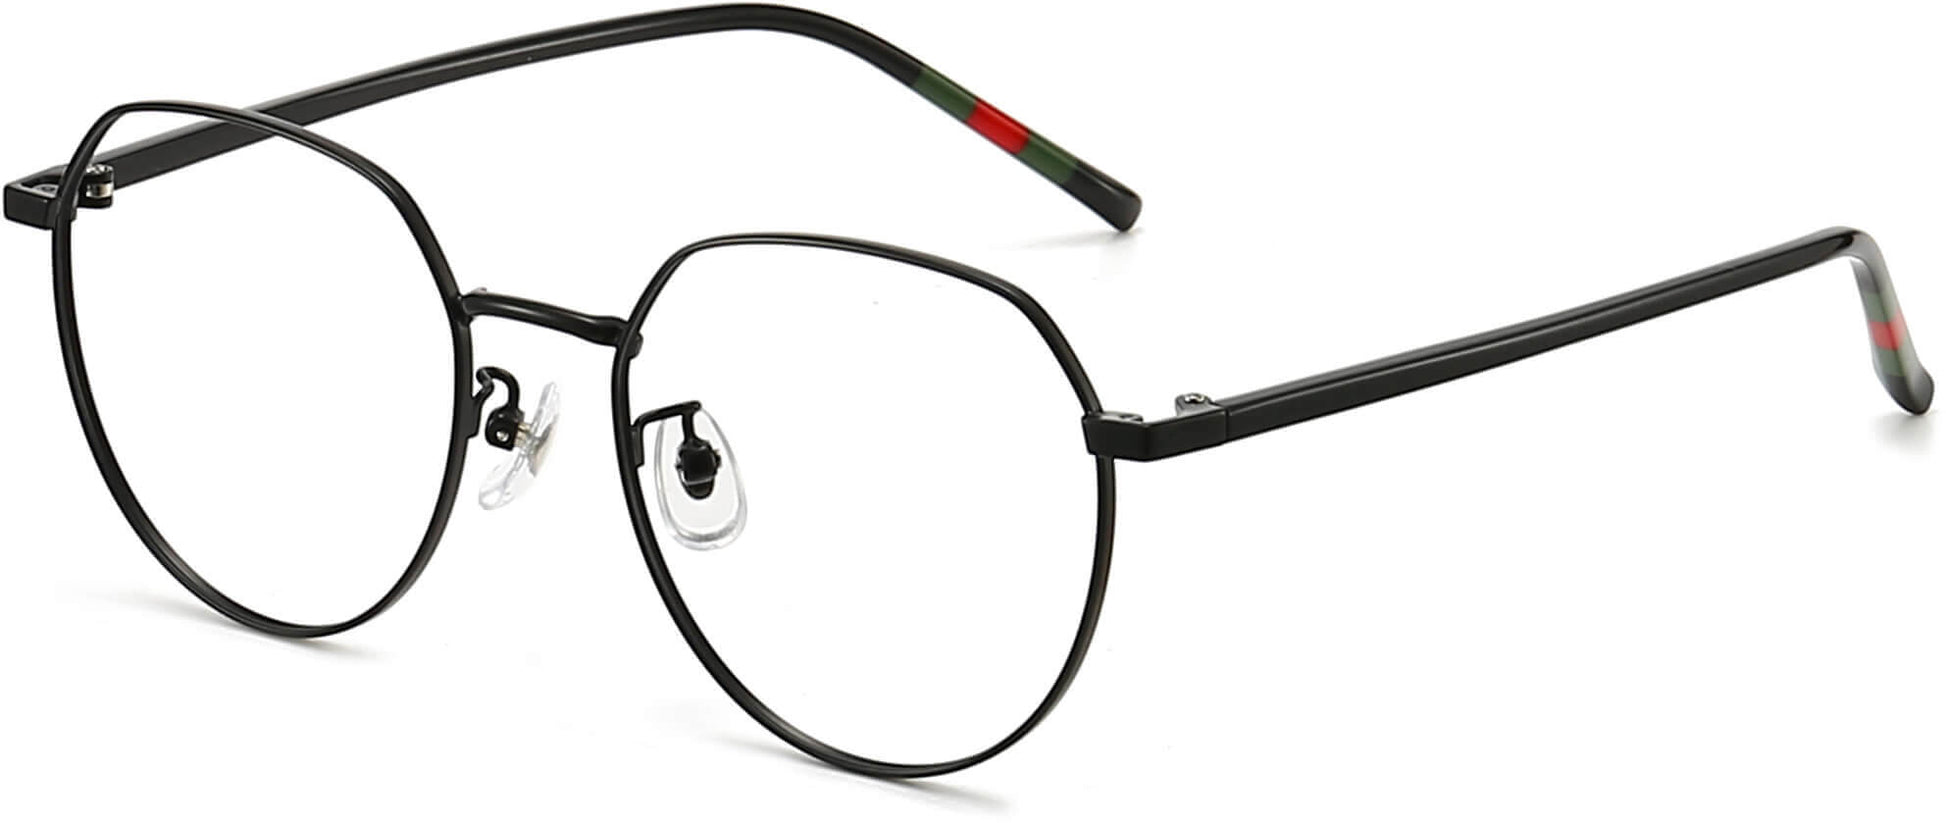 Grady Geometric Black  Eyeglasses from ANRRI, angle view